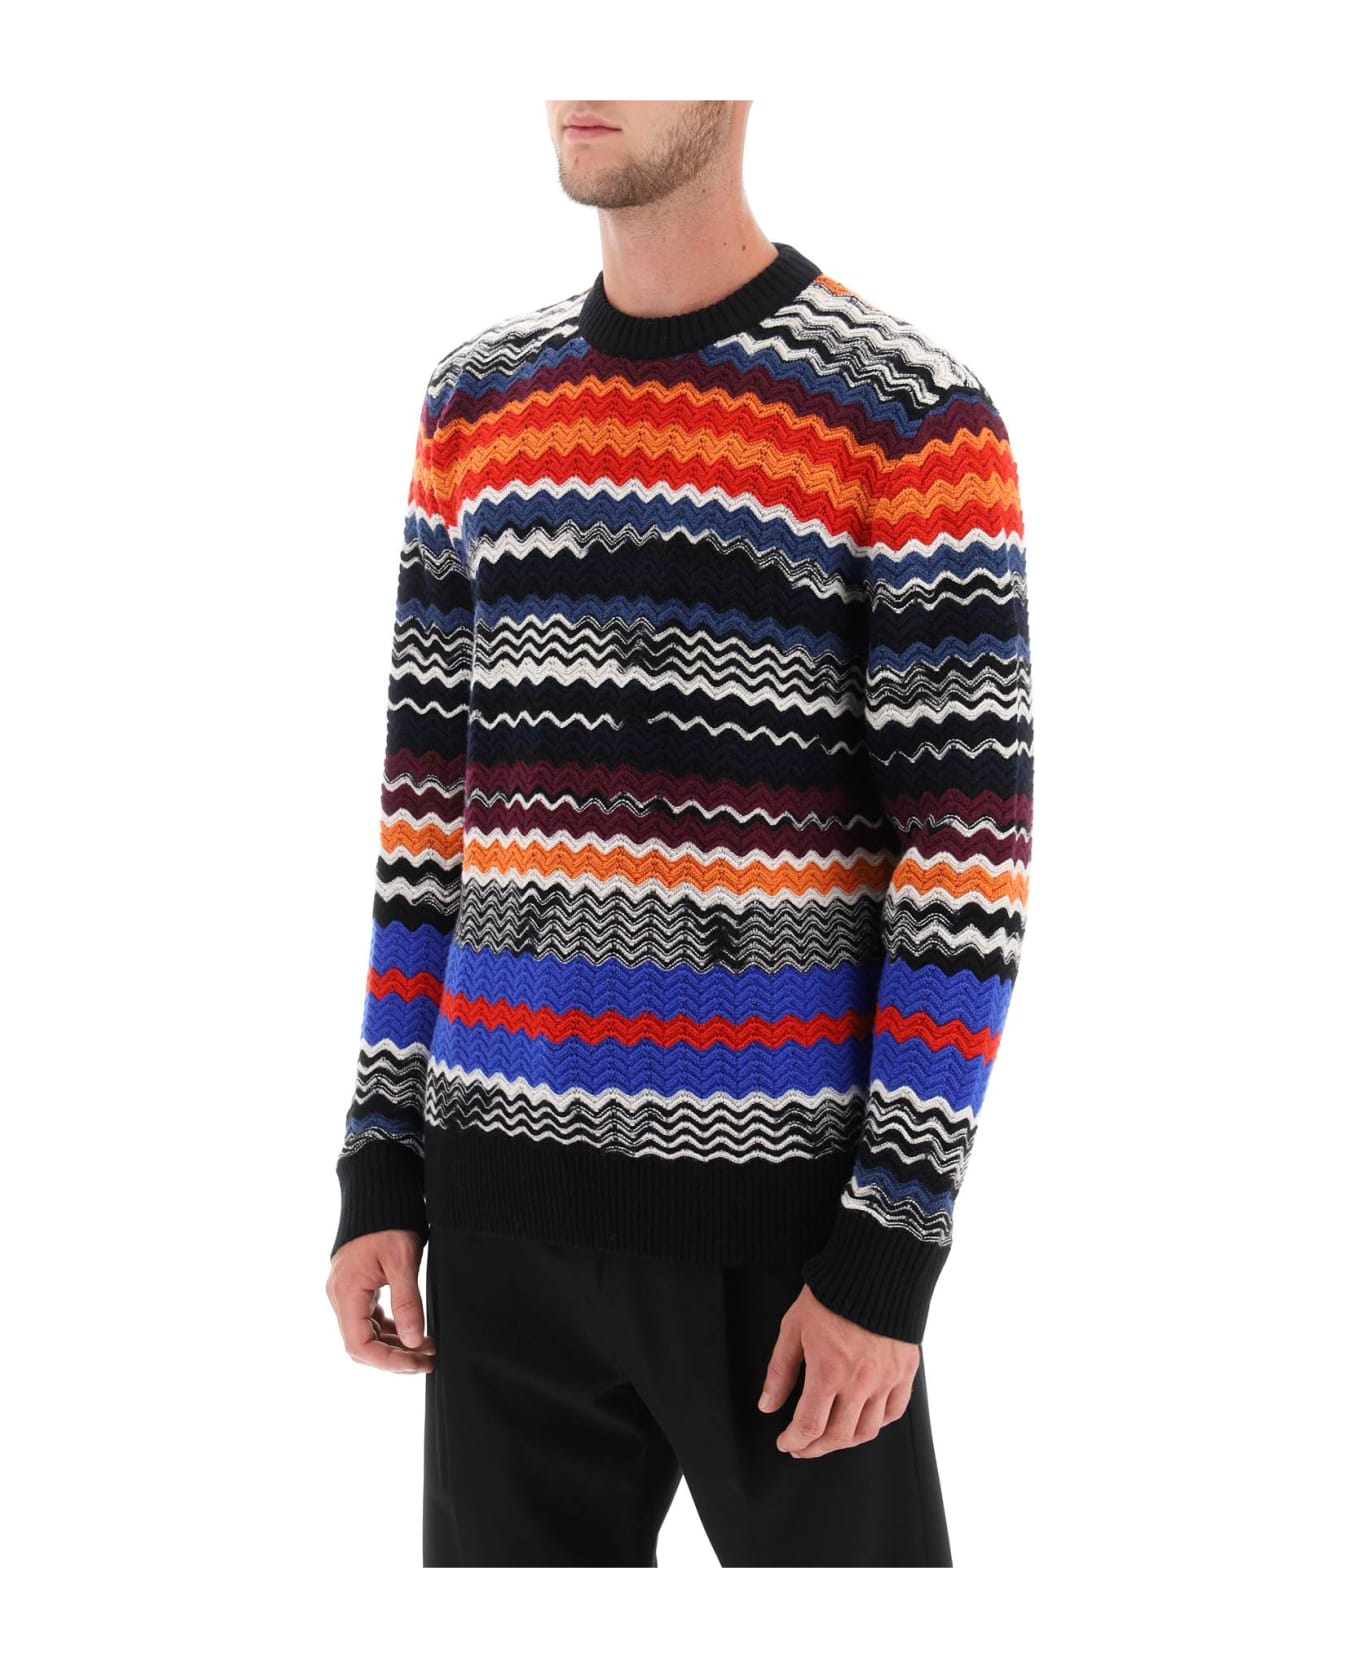 Missoni Crew-neck Sweater With Multicolor Herringbone Motif - Yb Orang/blk/red/blu/wh